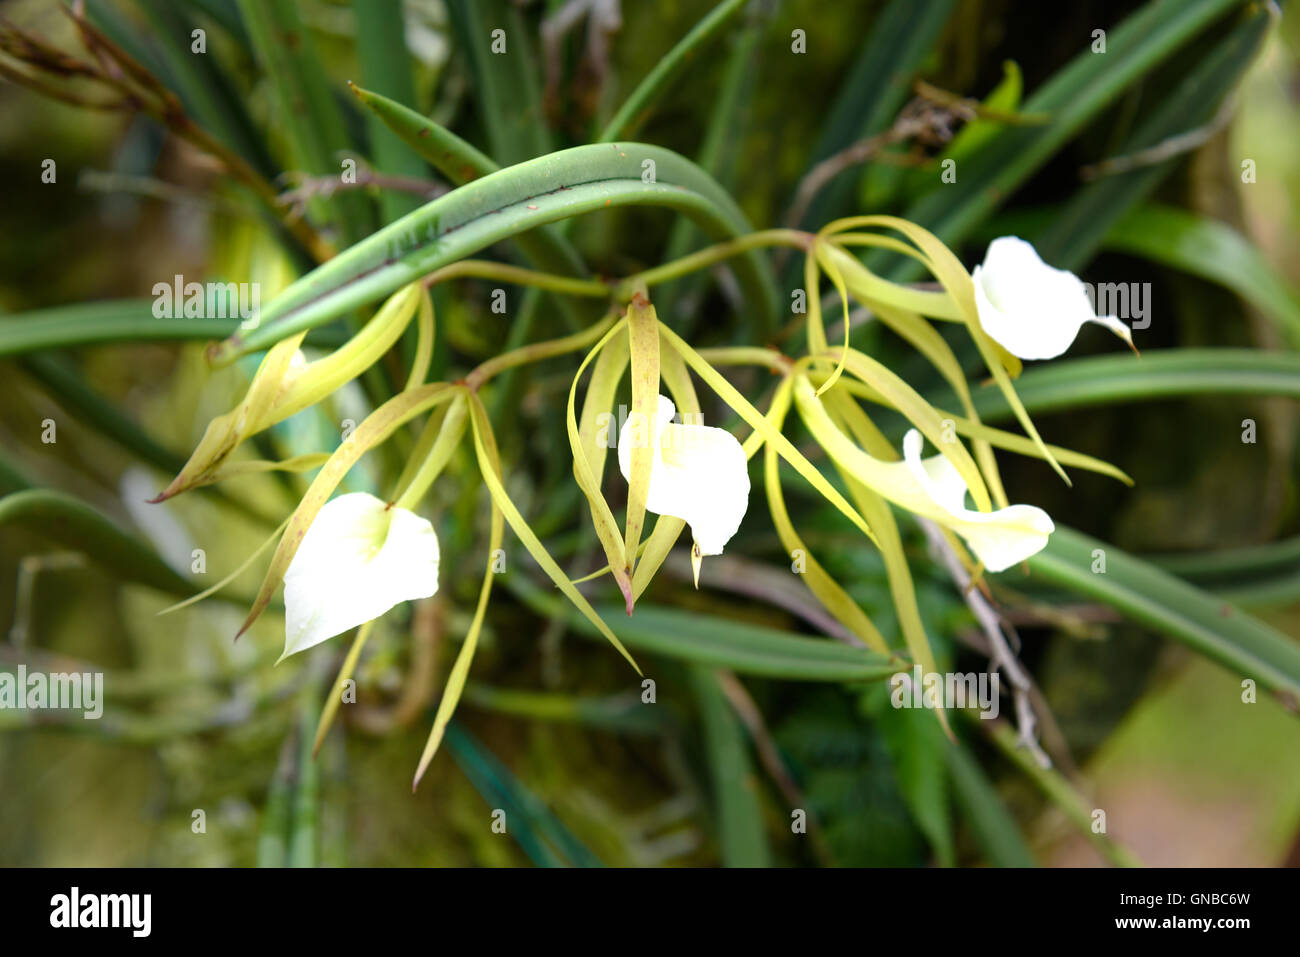 Brassavola orchids flower in the garden on green background Stock Photo